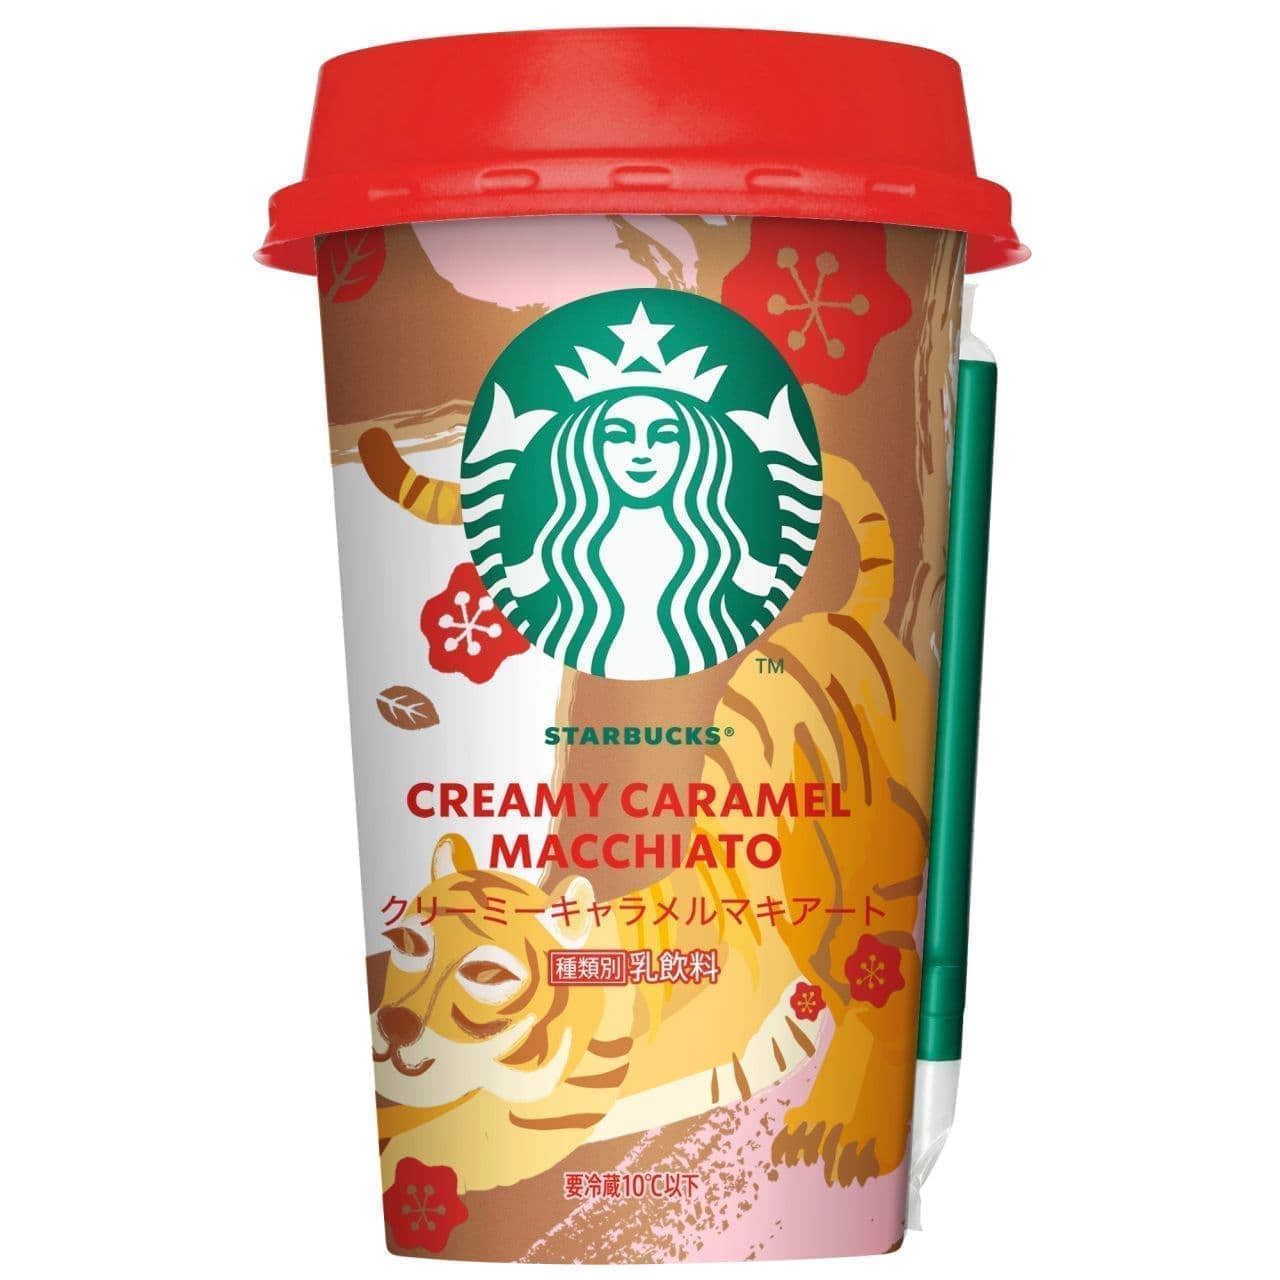 Starbucks Creamy Caramel Macchiato